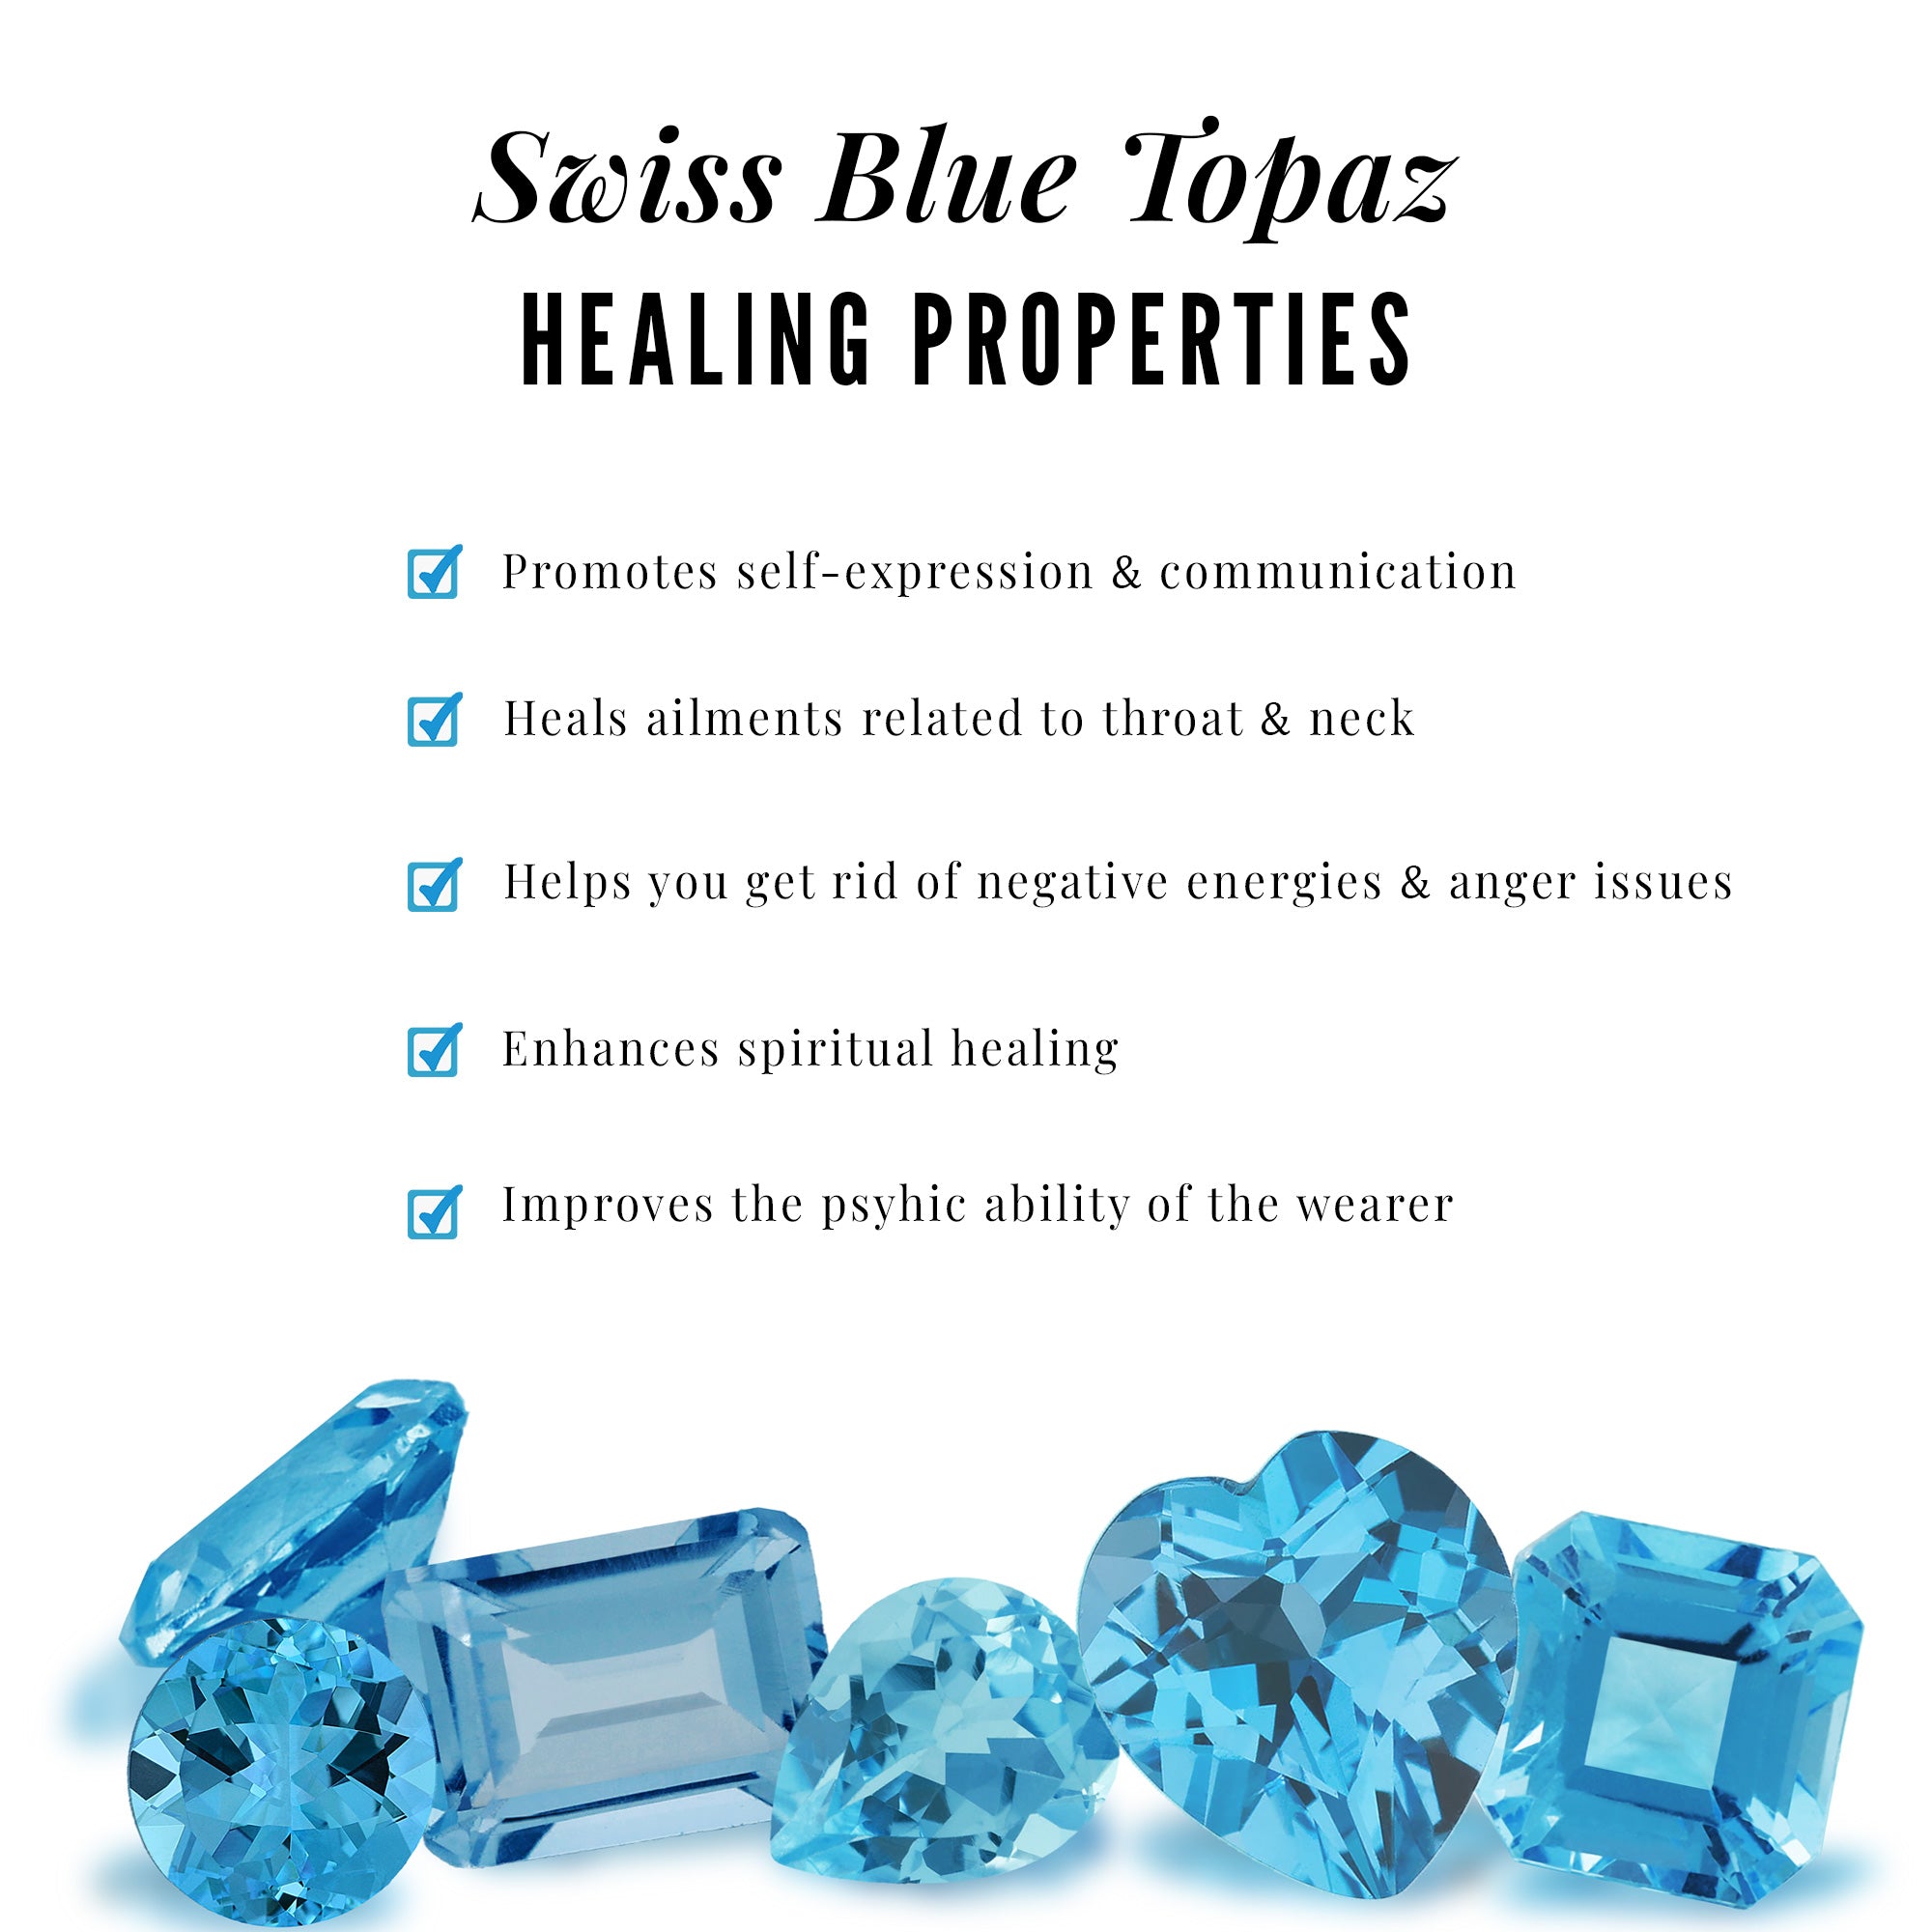 Minimal Half Eternity Ring with Swiss Blue Topaz and Diamond Swiss Blue Topaz - ( AAA ) - Quality - Rosec Jewels